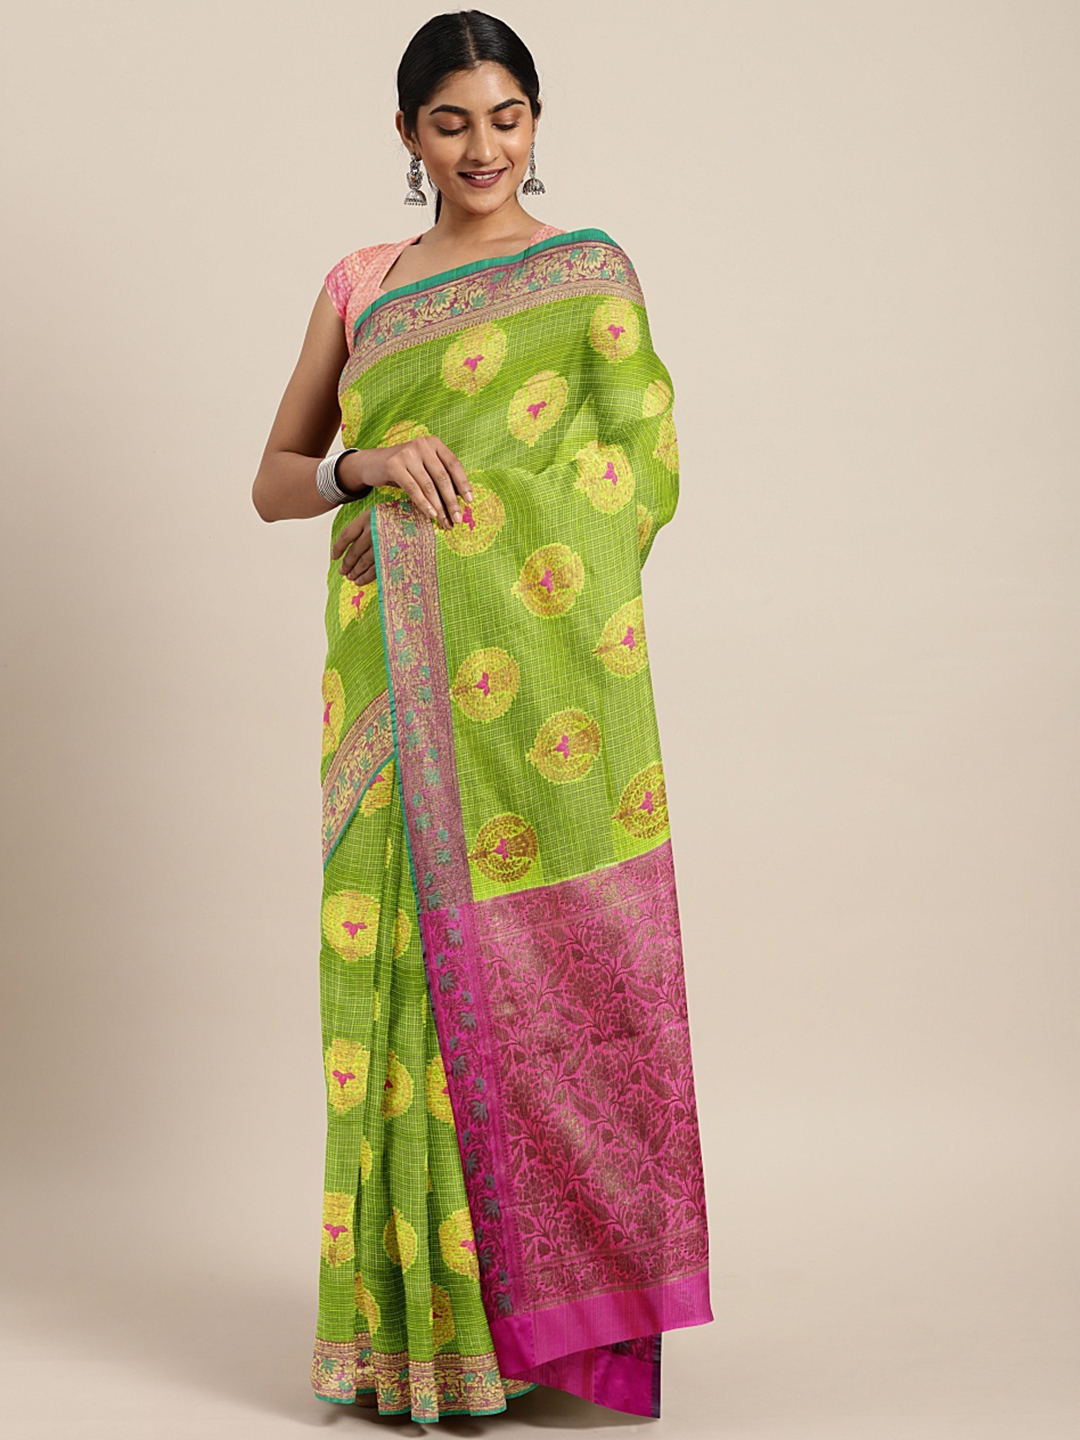 The Chennai Silks Classicate Green & Gold-Toned Net Woven Design Kota Saree Price in India